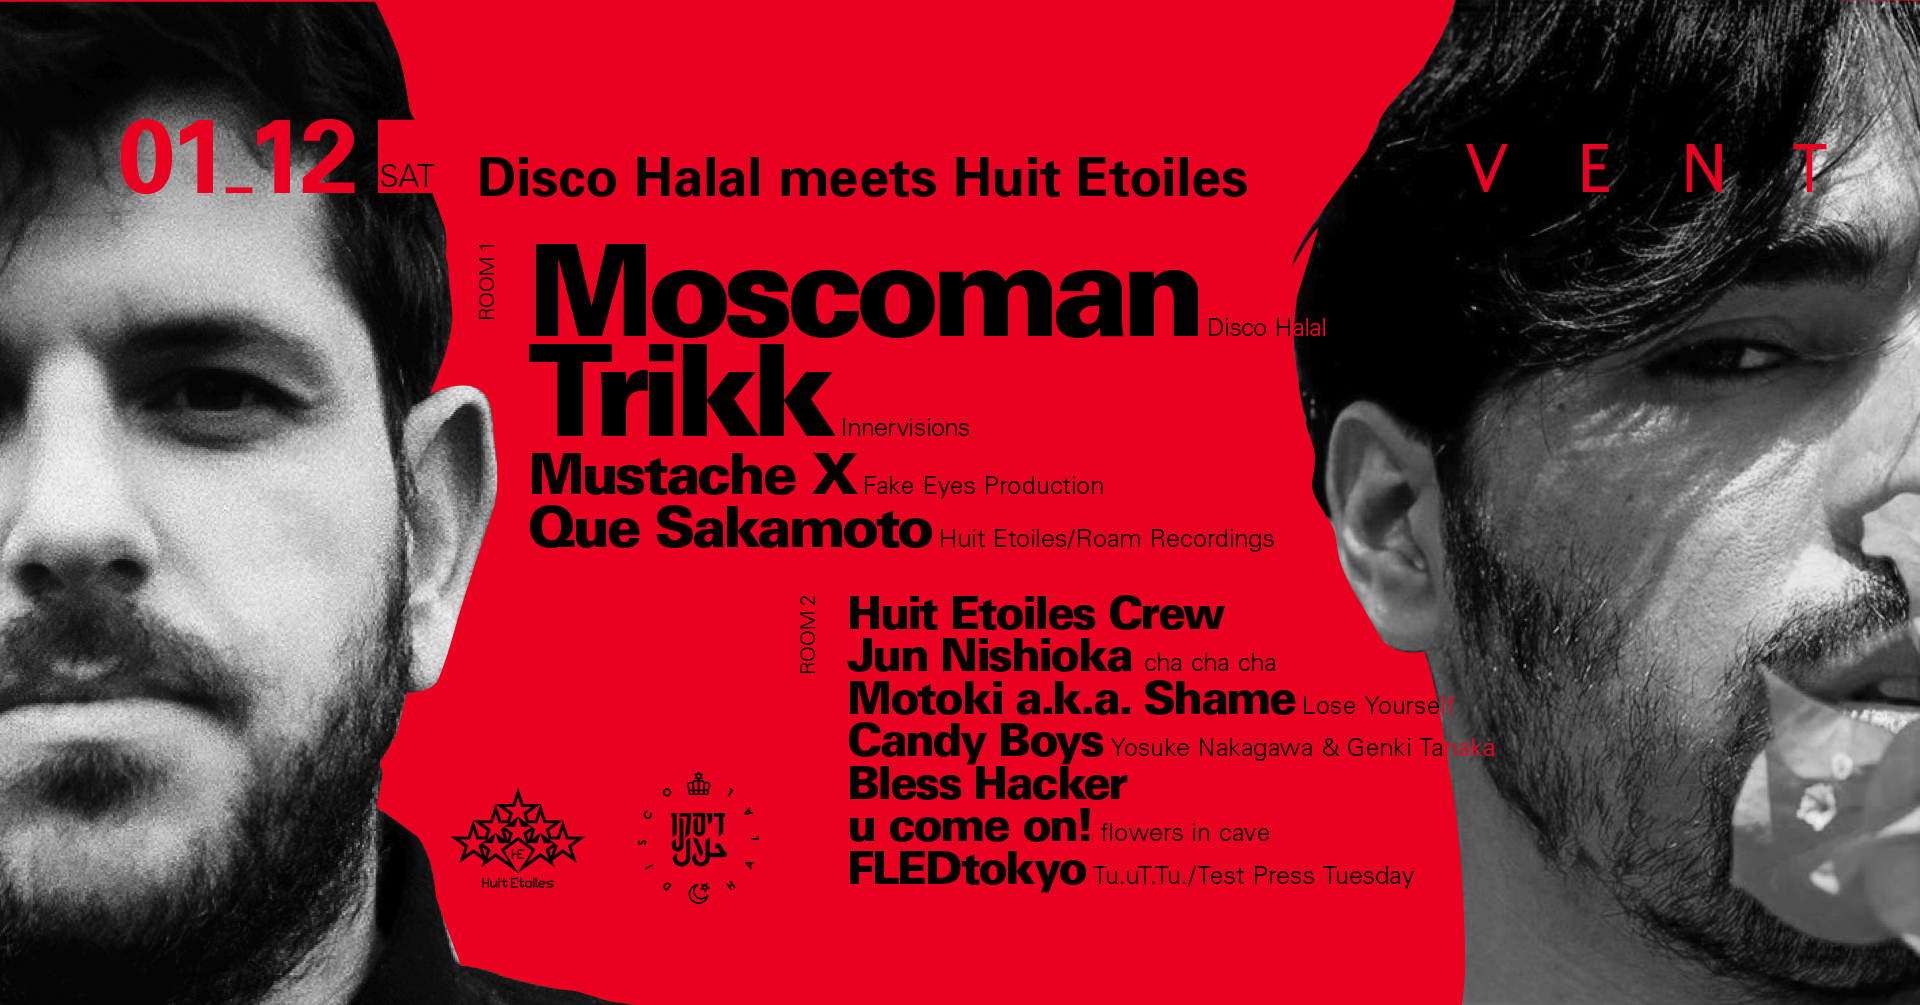 Disco Halal meets Huit Etoiles